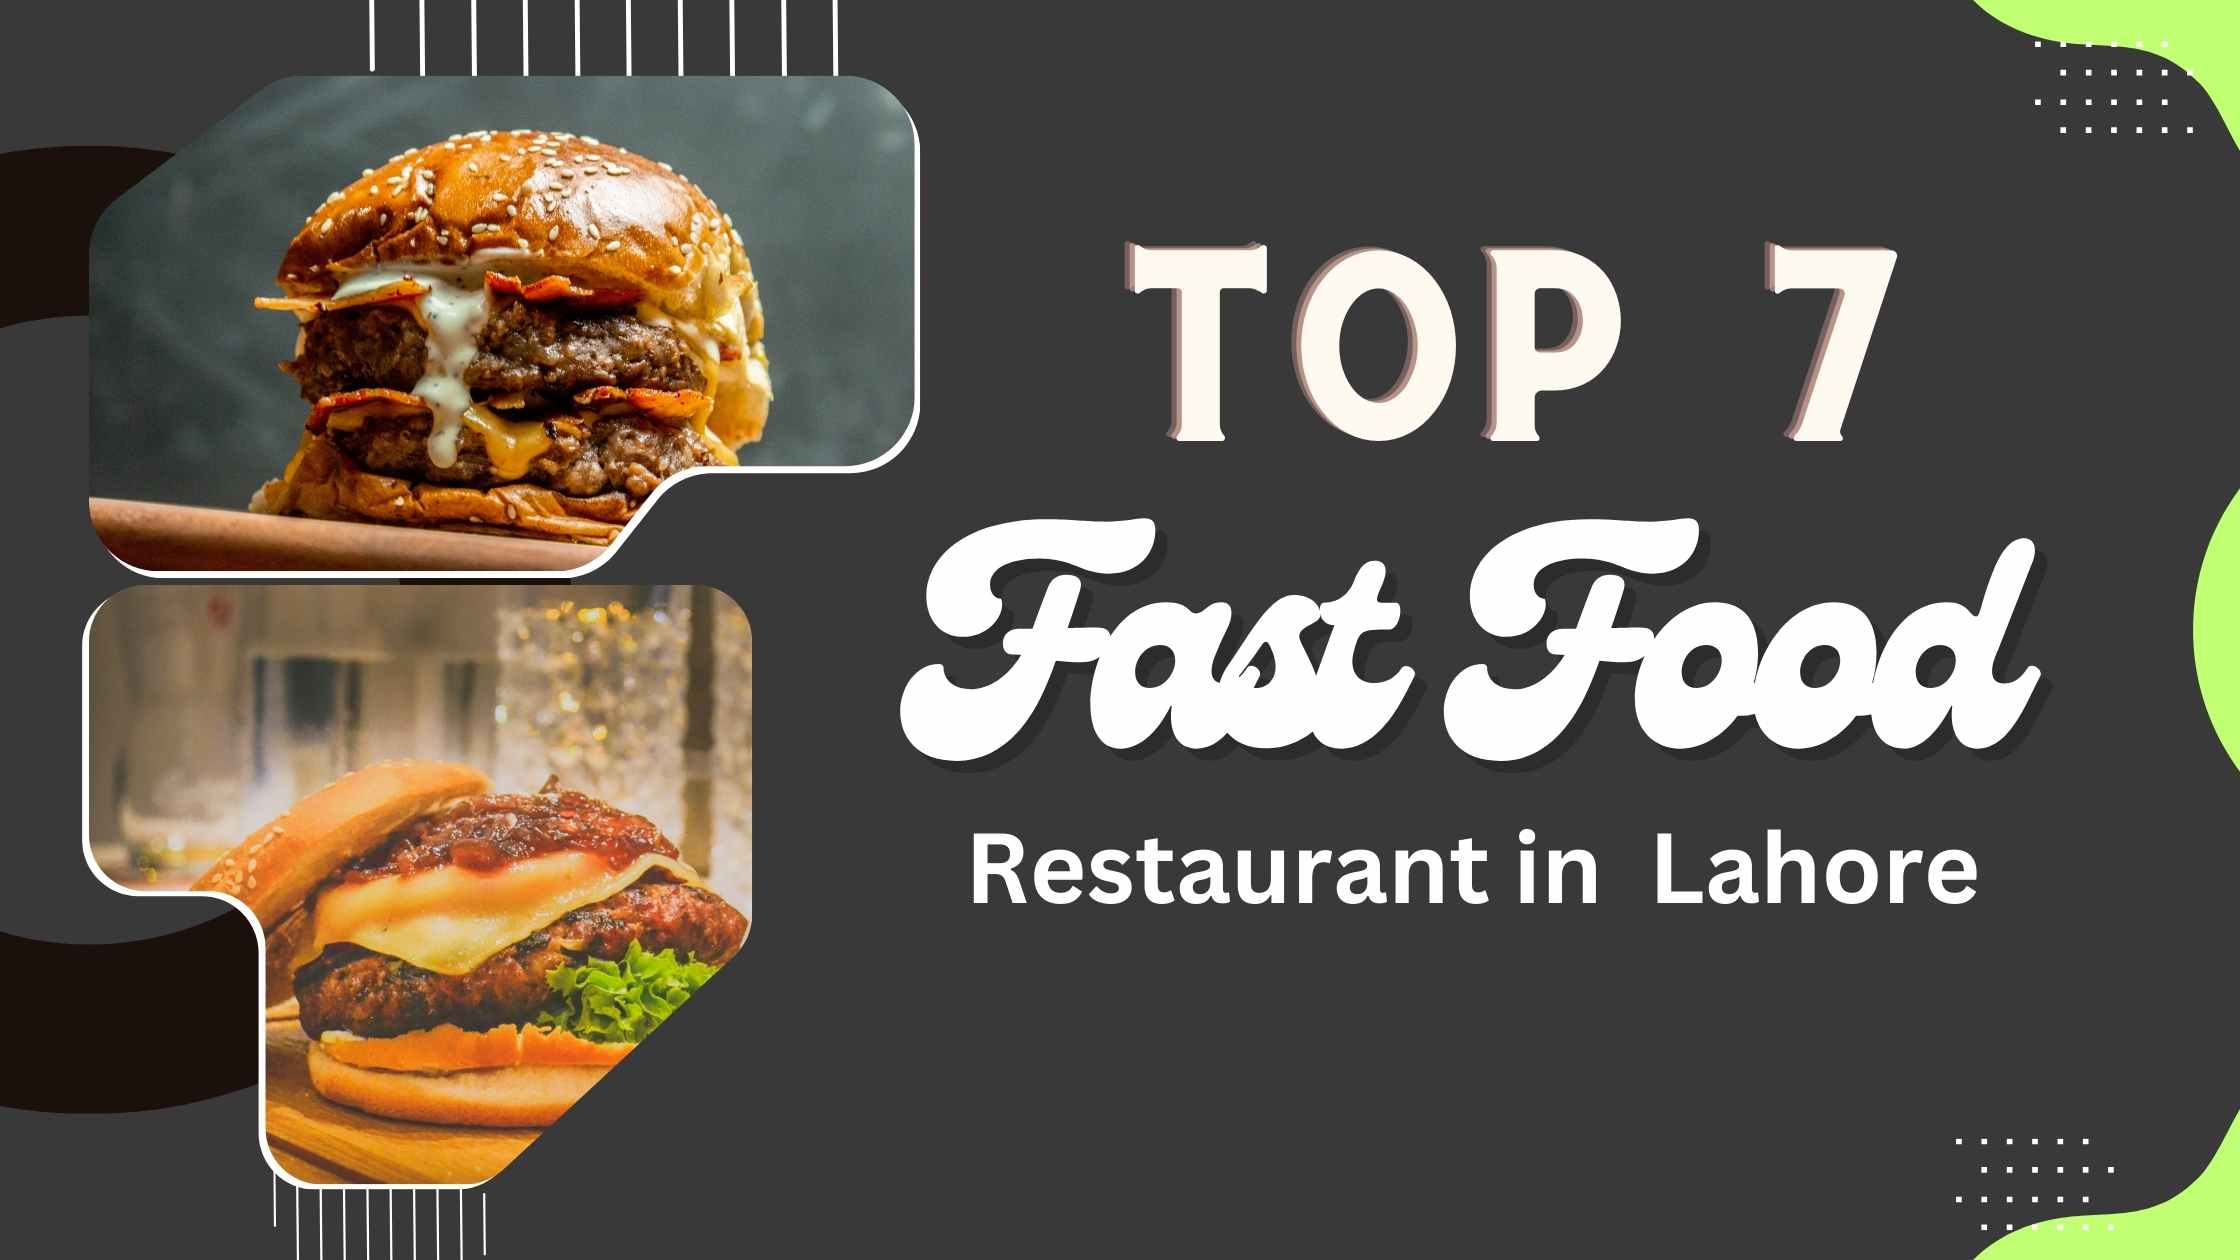 Top 7 Fast food restaurant in lahore